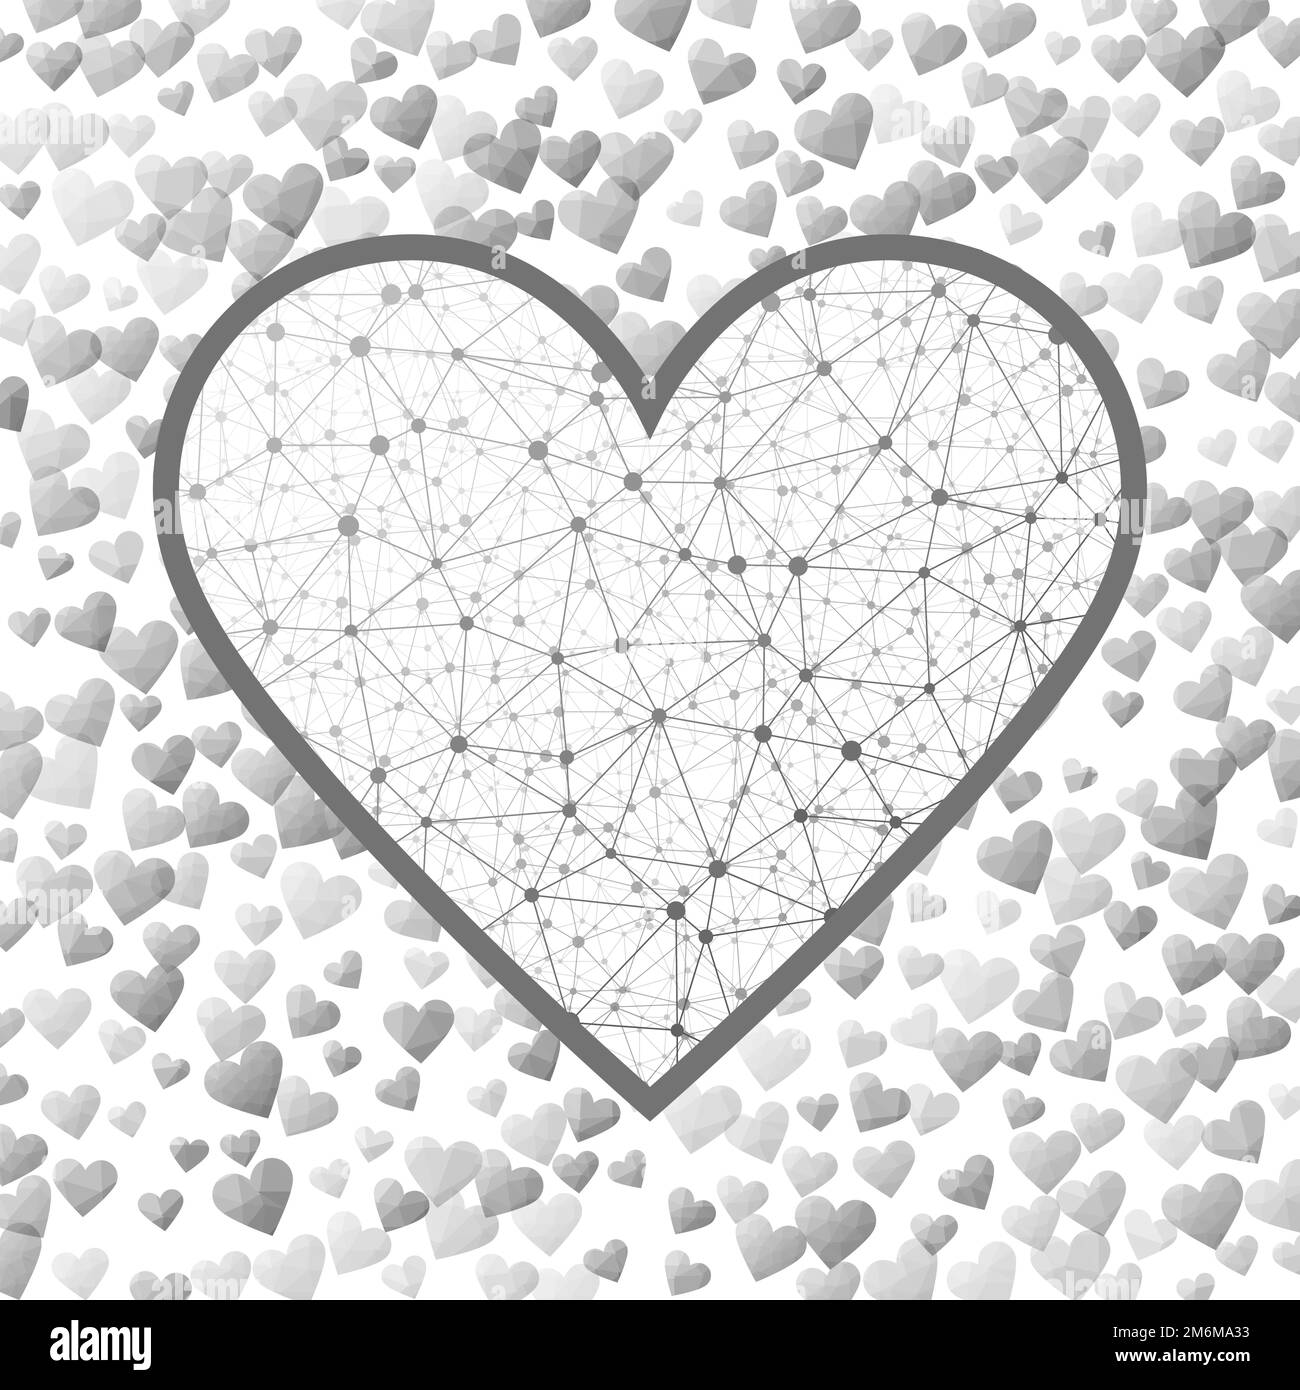 https://c8.alamy.com/comp/2M6MA33/geometric-heart-geometric-heart-mesh-in-grey-color-shades-grey-connections-appealing-network-style-vector-illustration-2M6MA33.jpg